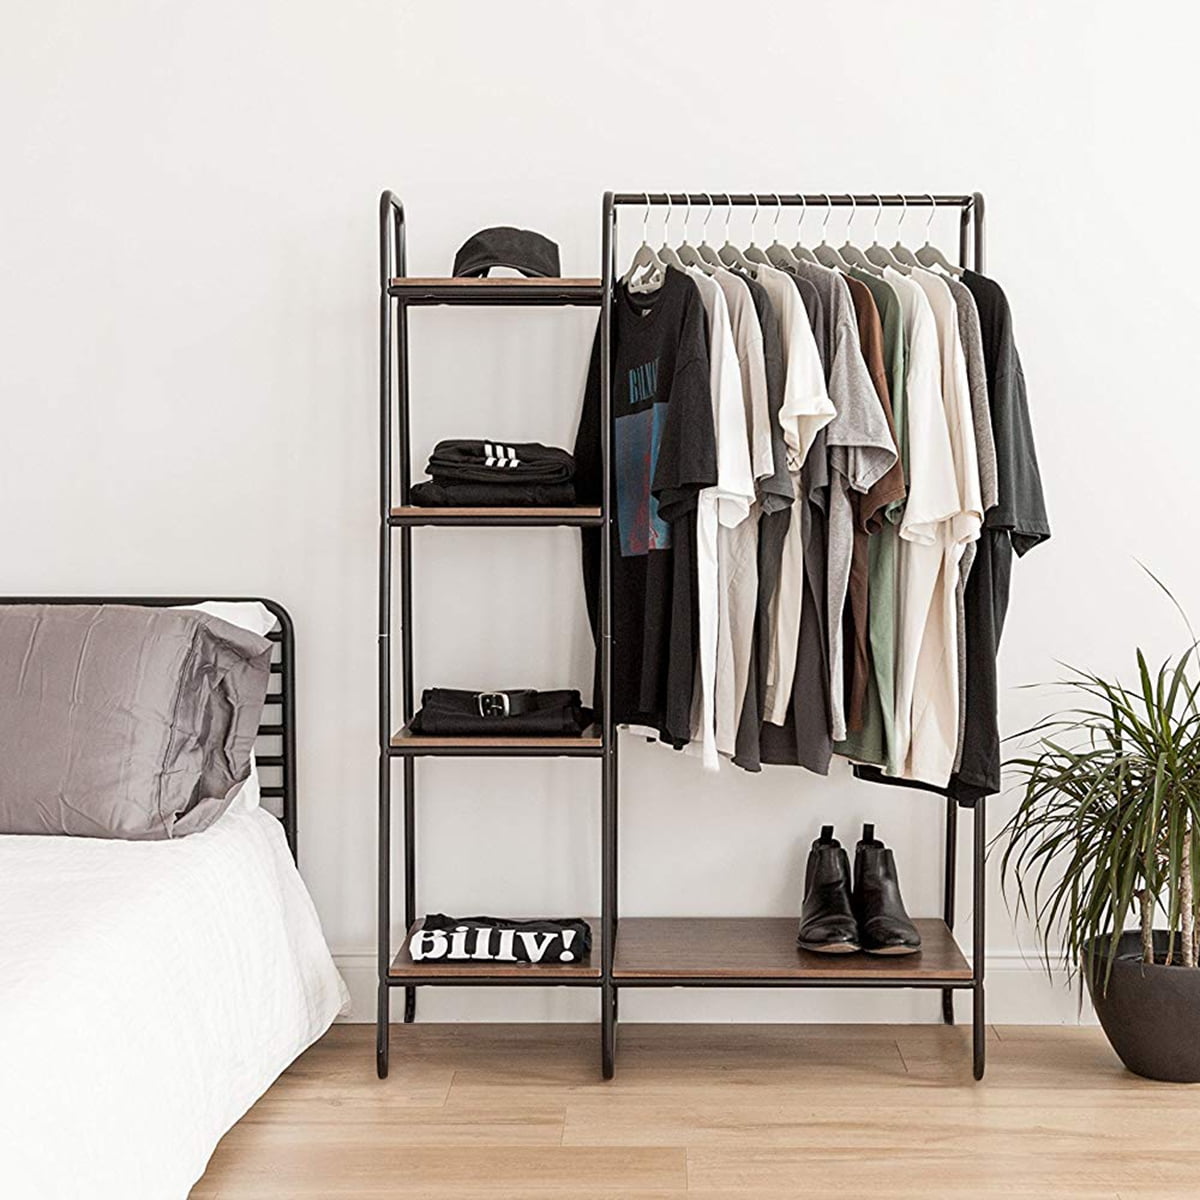 metal garment rack home storage rack hanging clothing bar with multi wooden shelves 60 x 40 walmart com